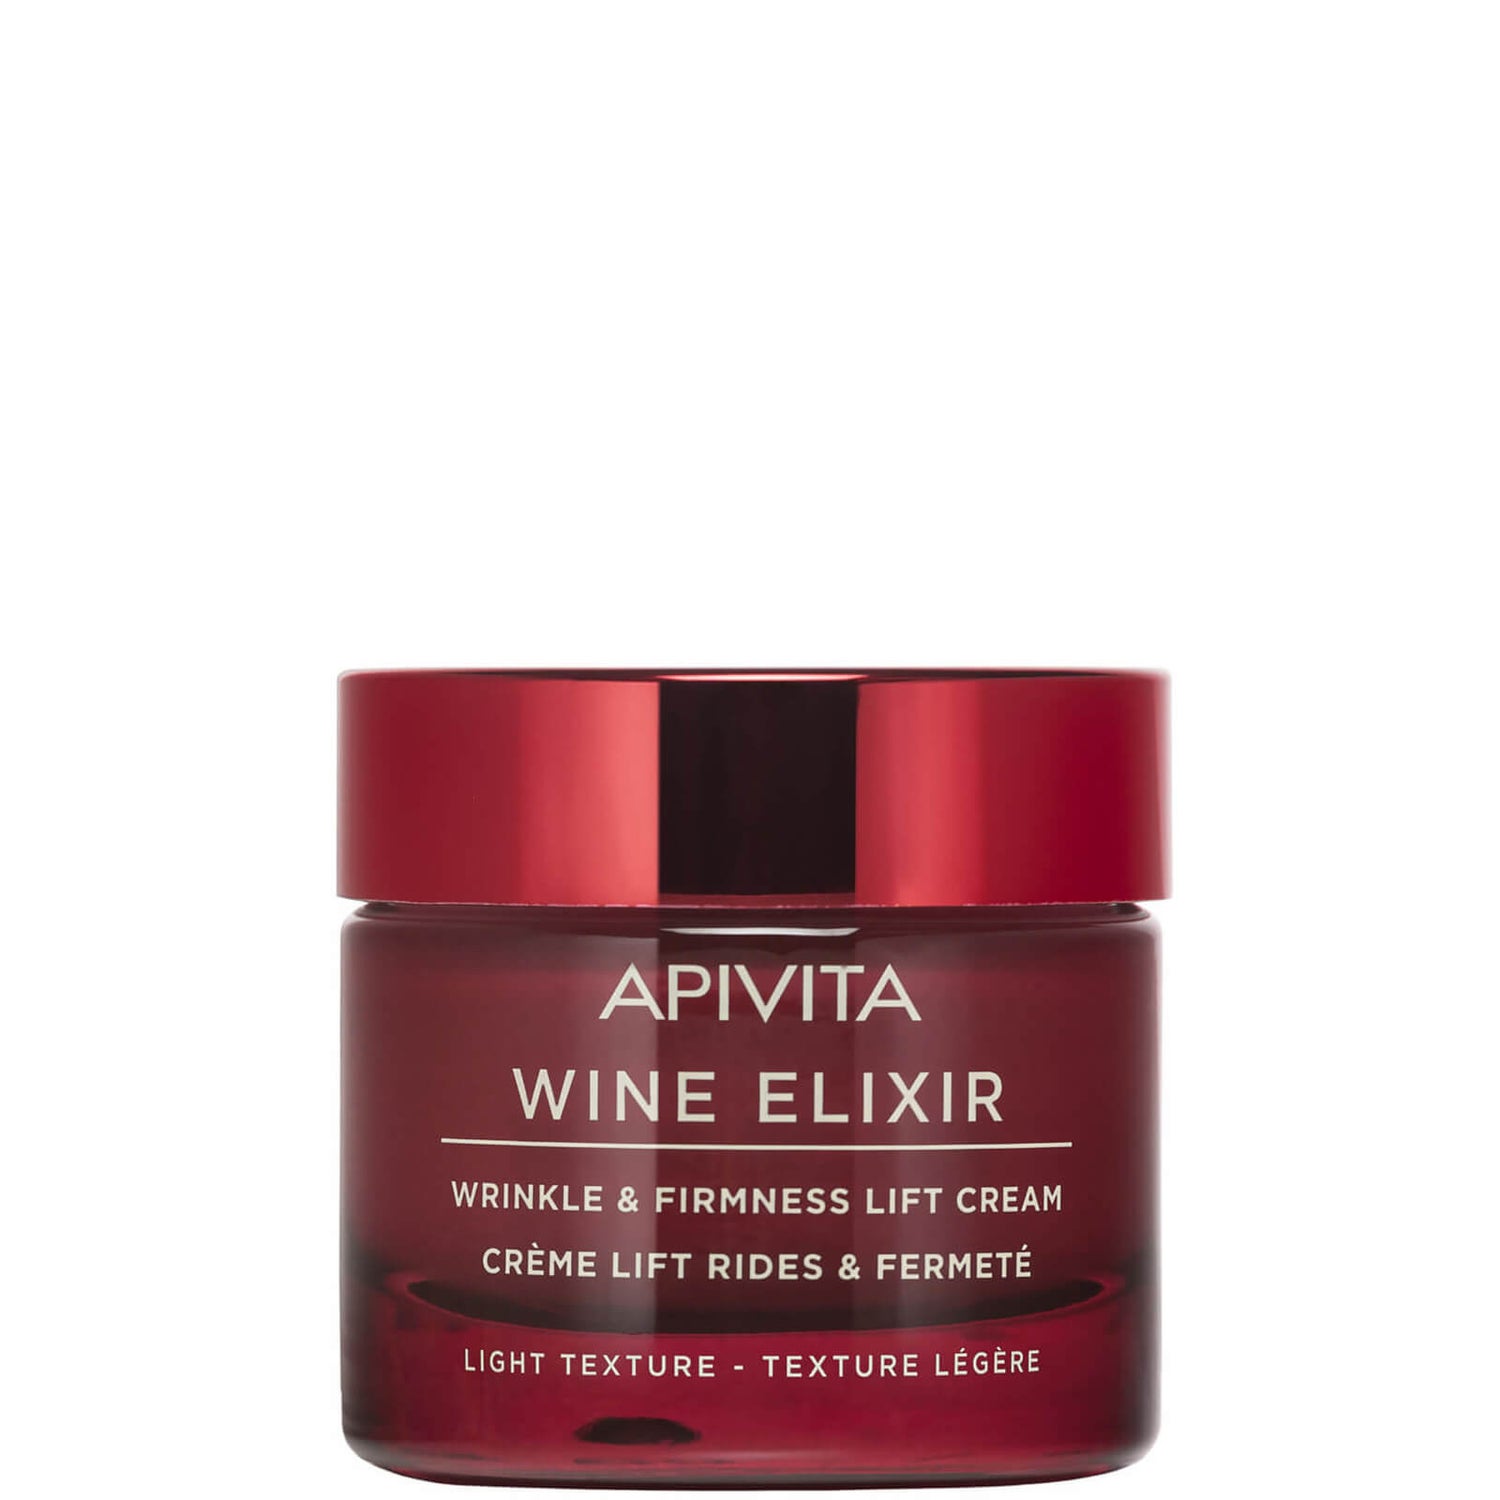 APIVITA Wine Elixir crema anti-rughe rassodante effetto lifting - texture leggera 50 ml